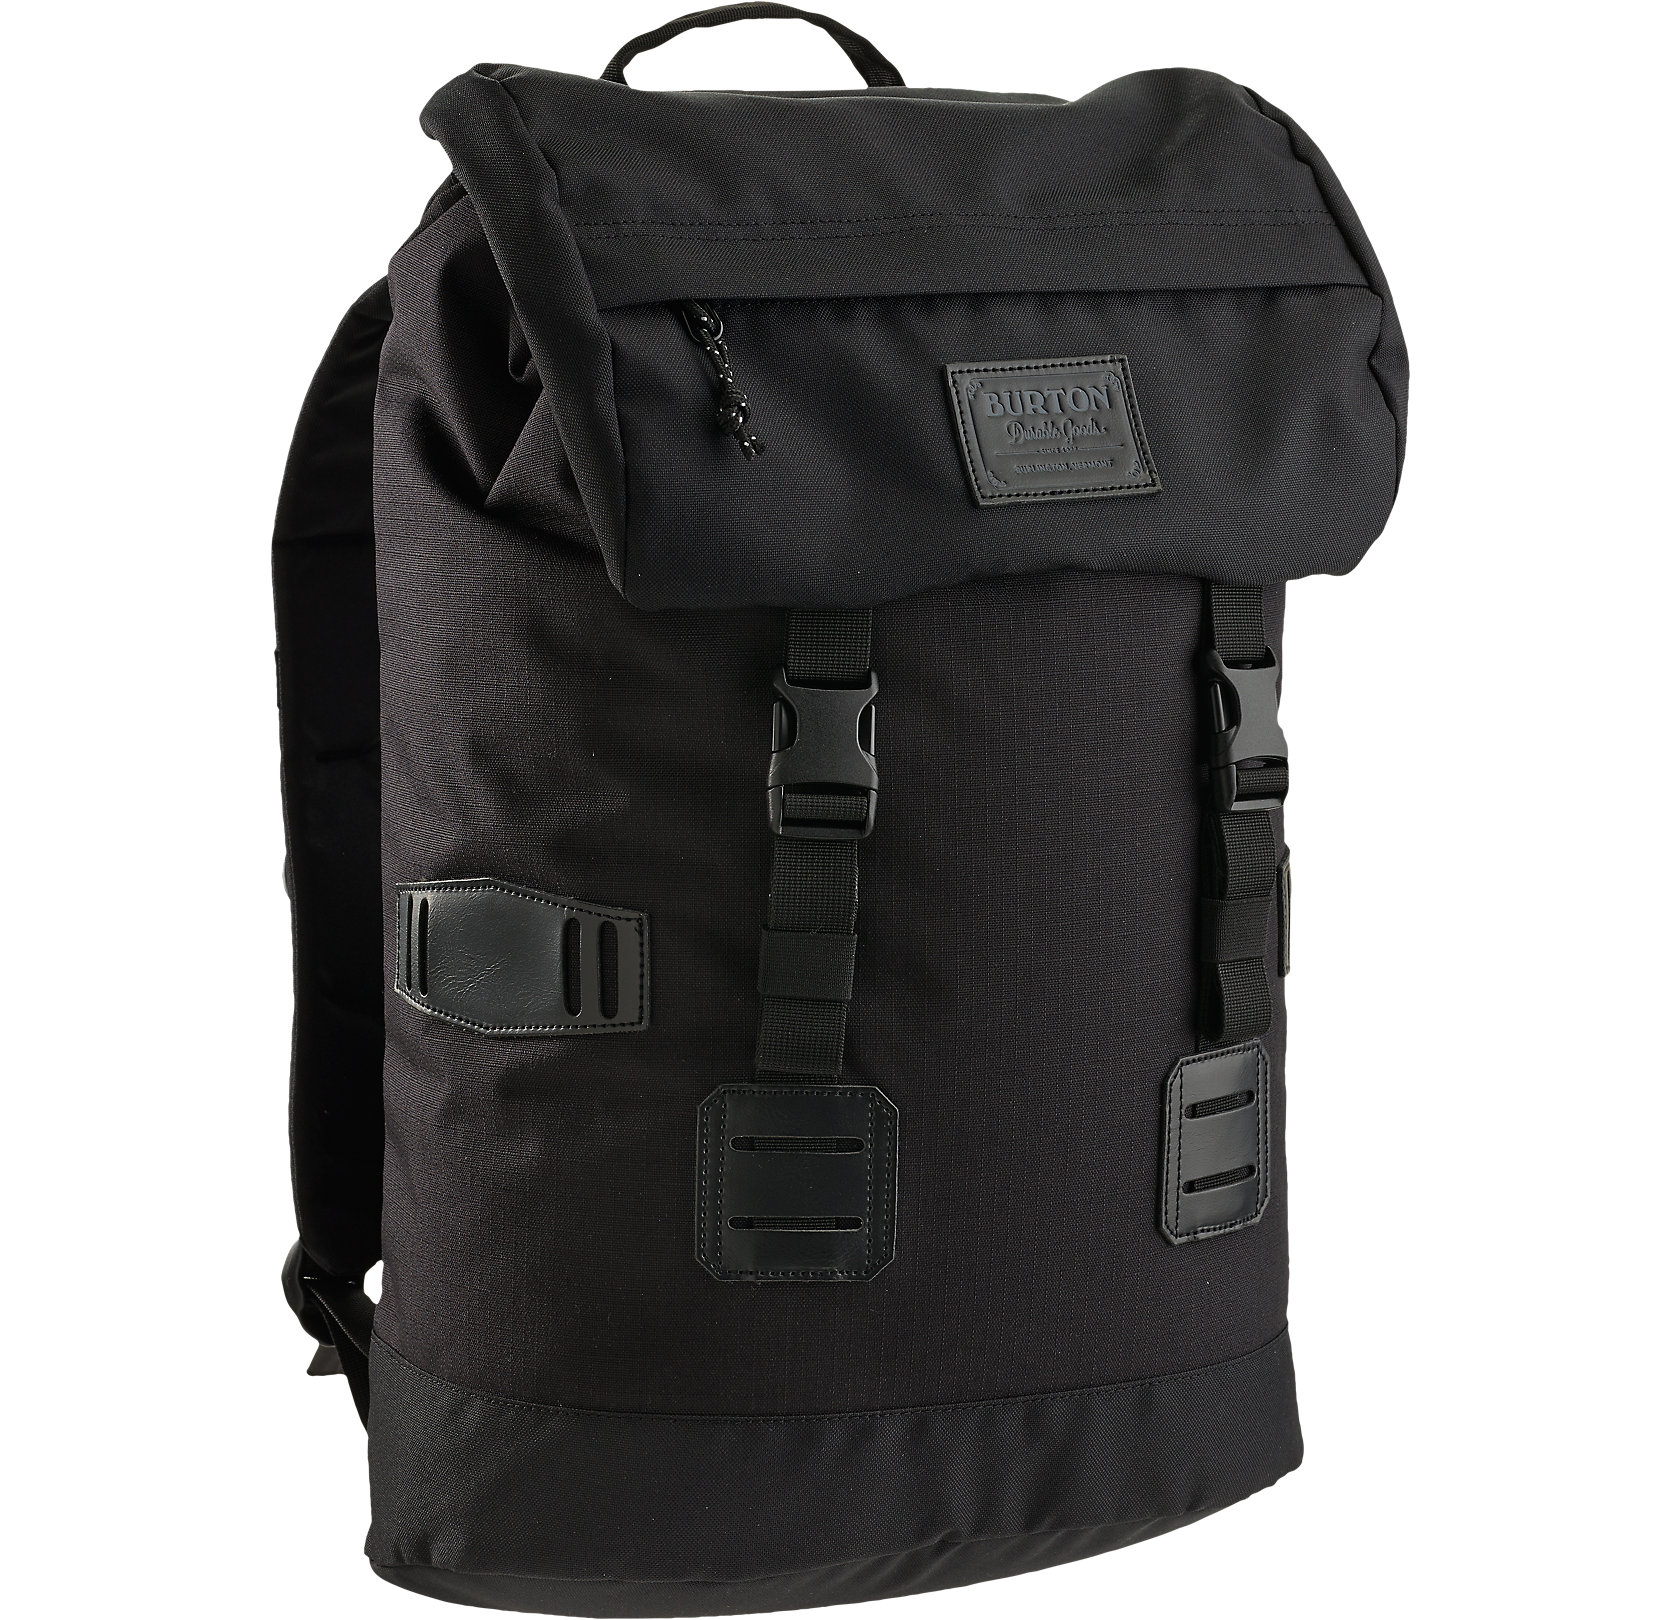 Burton tinder backpack